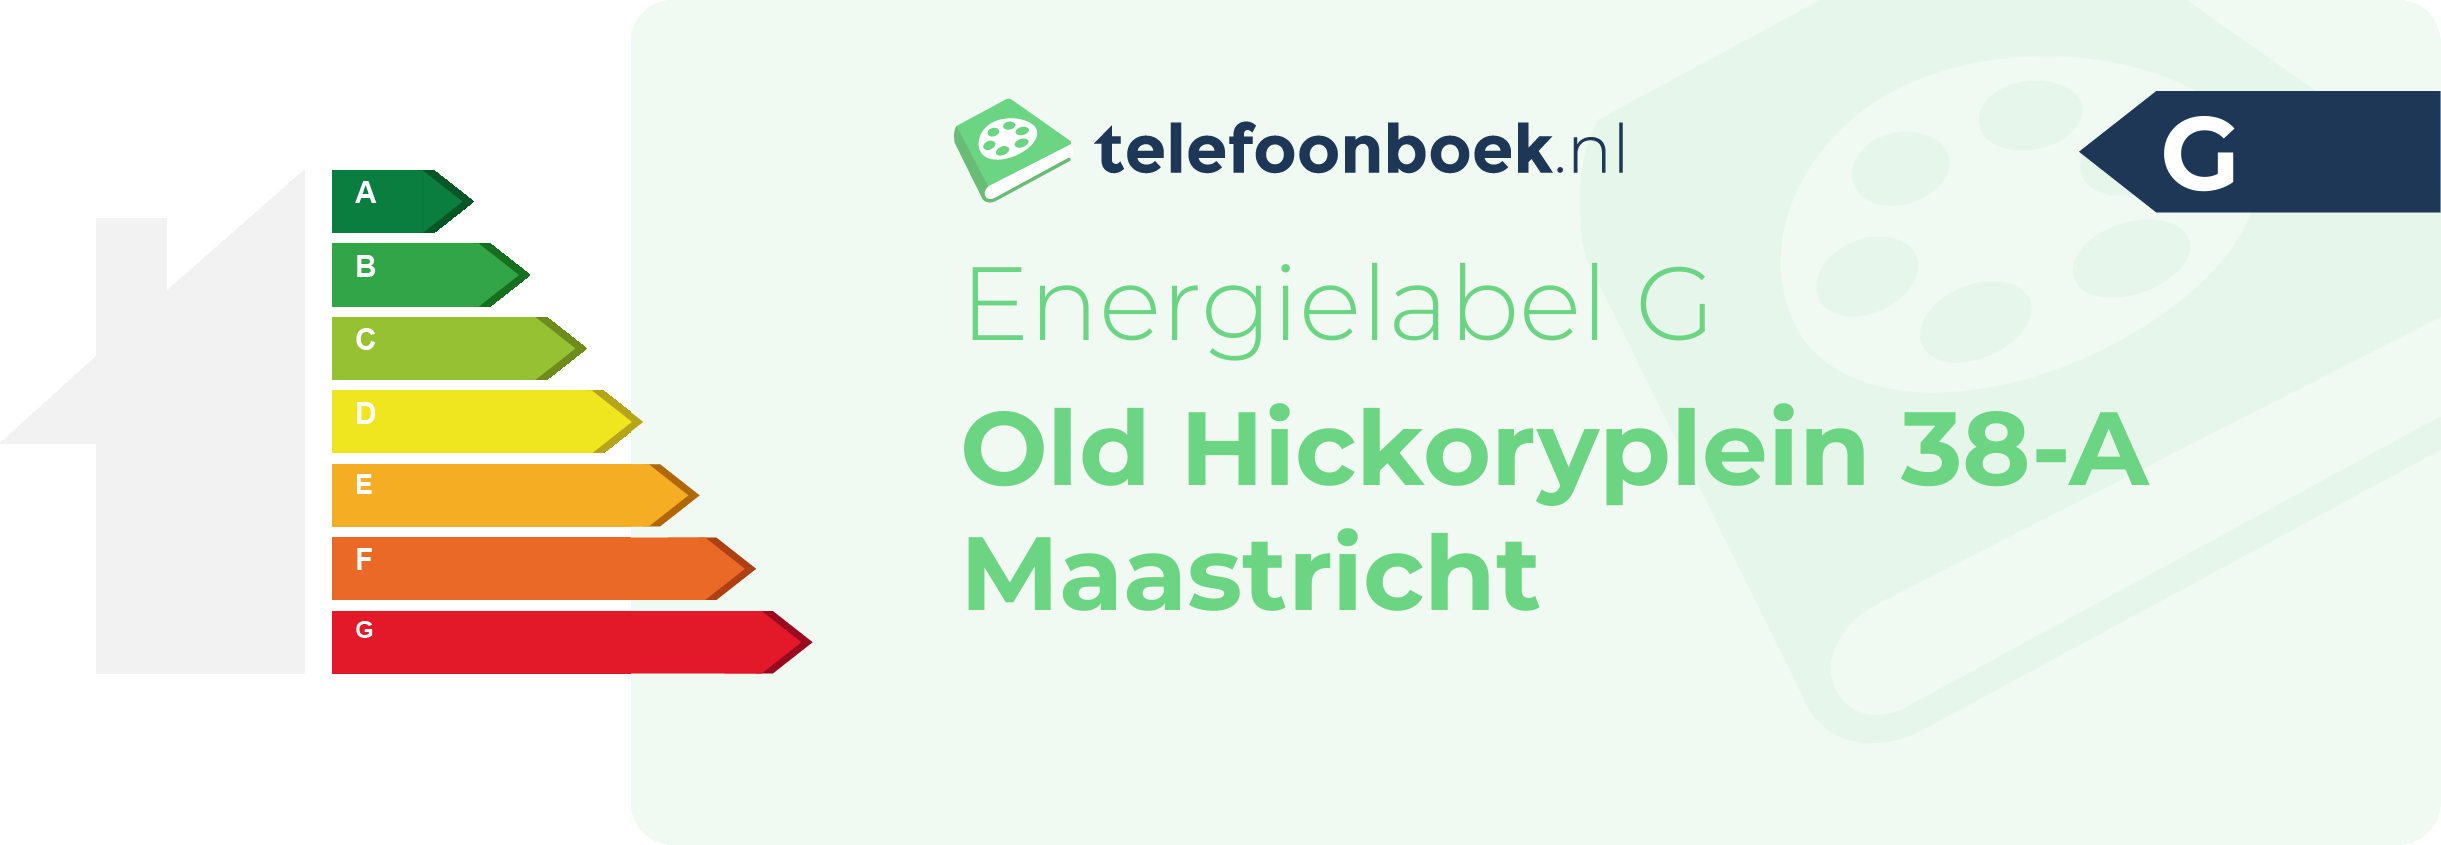 Energielabel Old Hickoryplein 38-A Maastricht